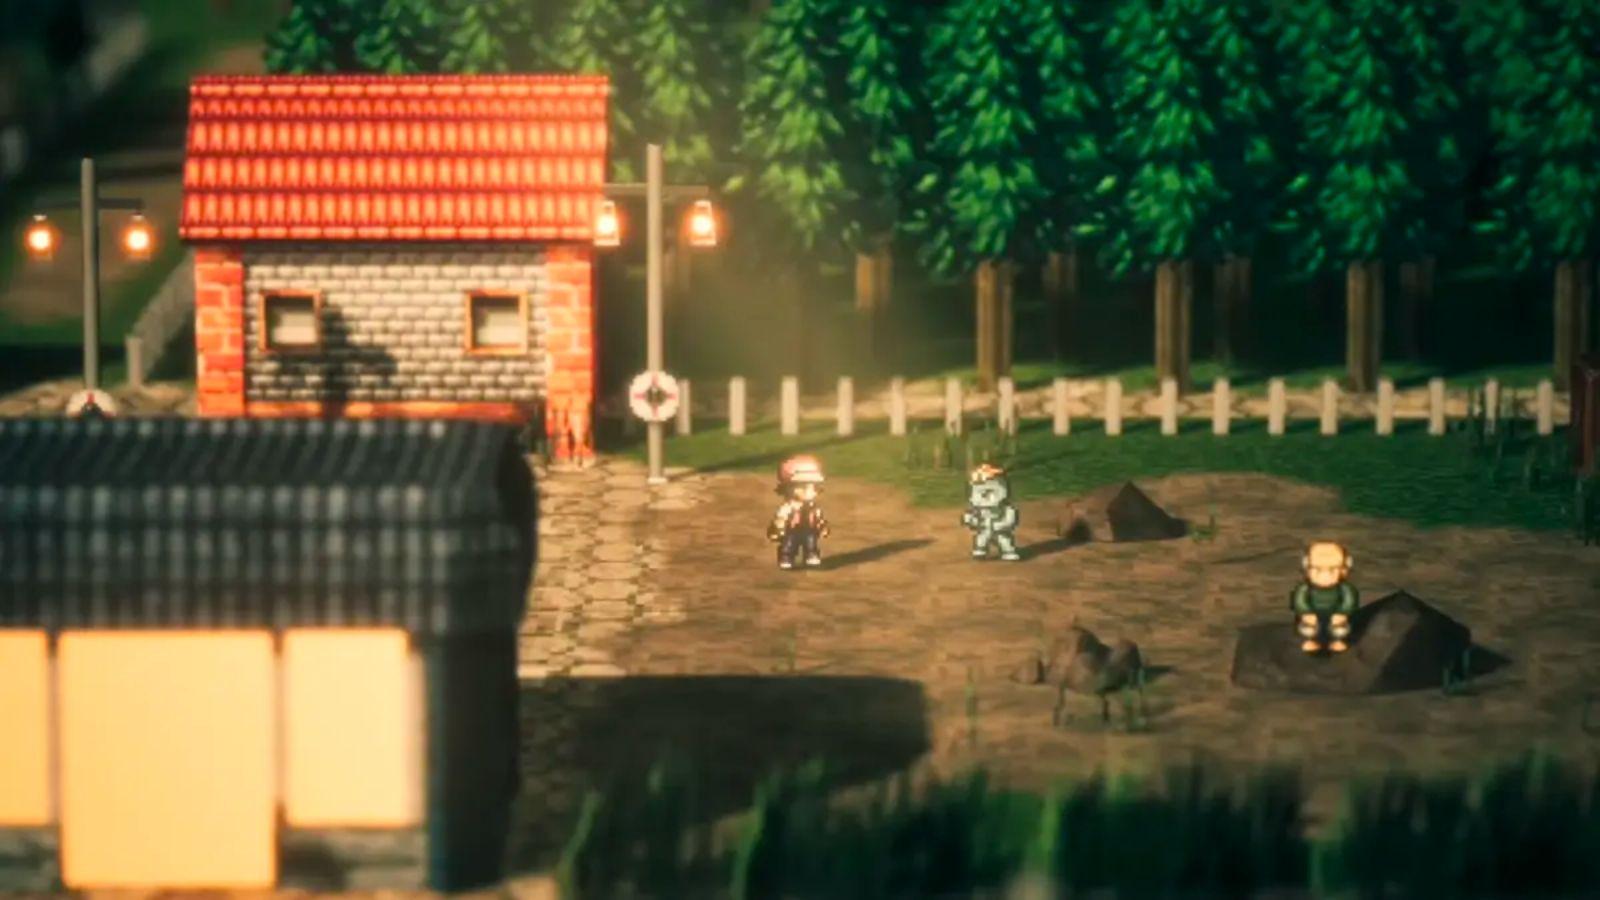 Original Pokémon Anime Opening Remade For Honkai: Star Rail By Fan